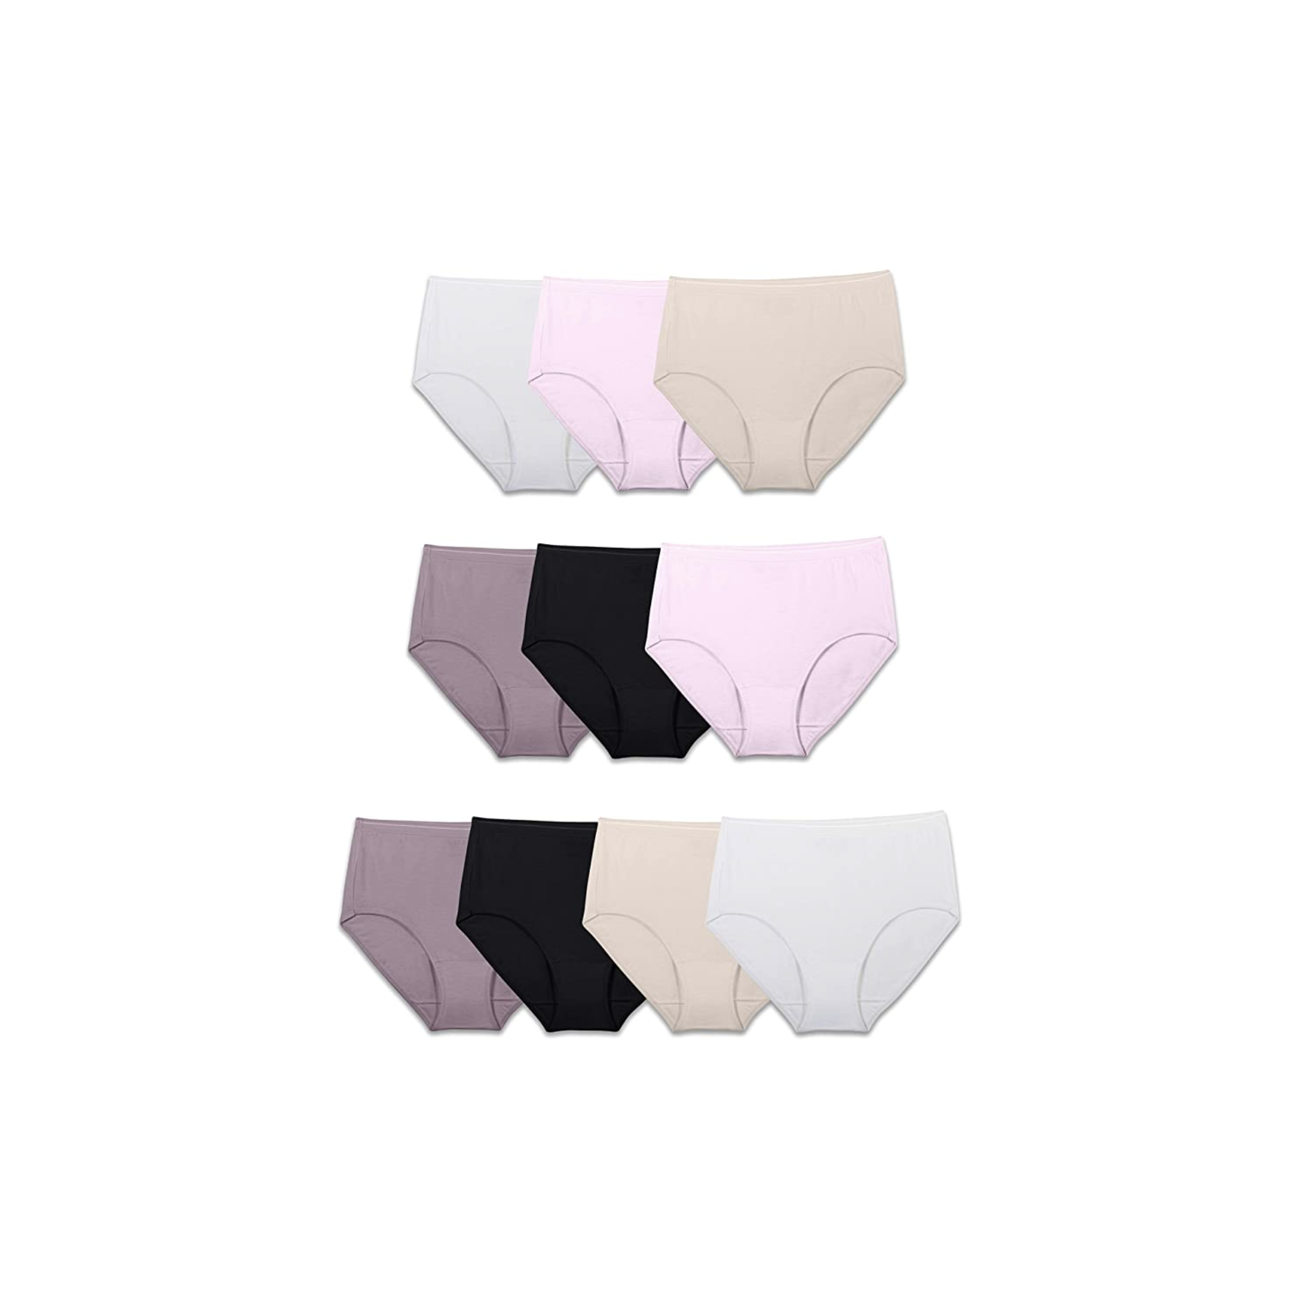 SIMIYA Womens Cotton Underwear Comfort Breathable Bikini Panties,Pack of 7 